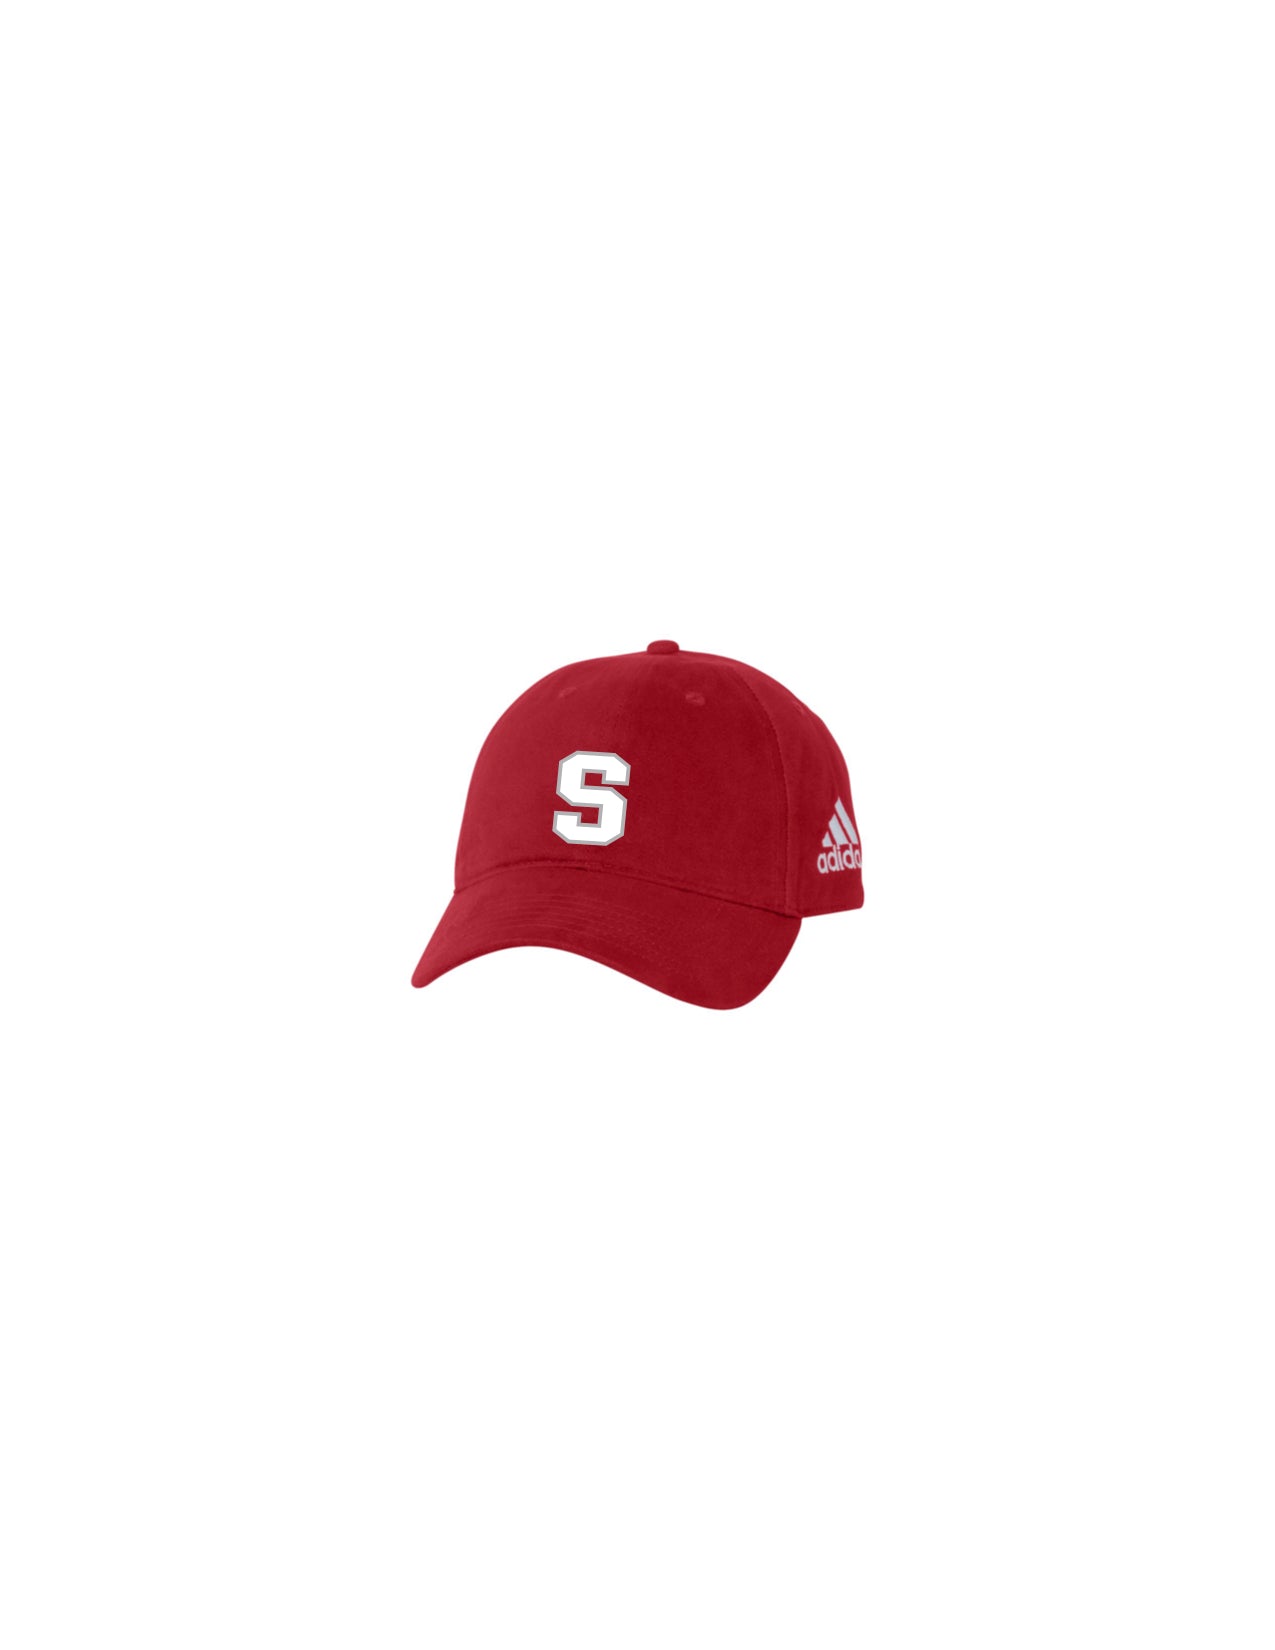 Springfield Softball Adidas Hat